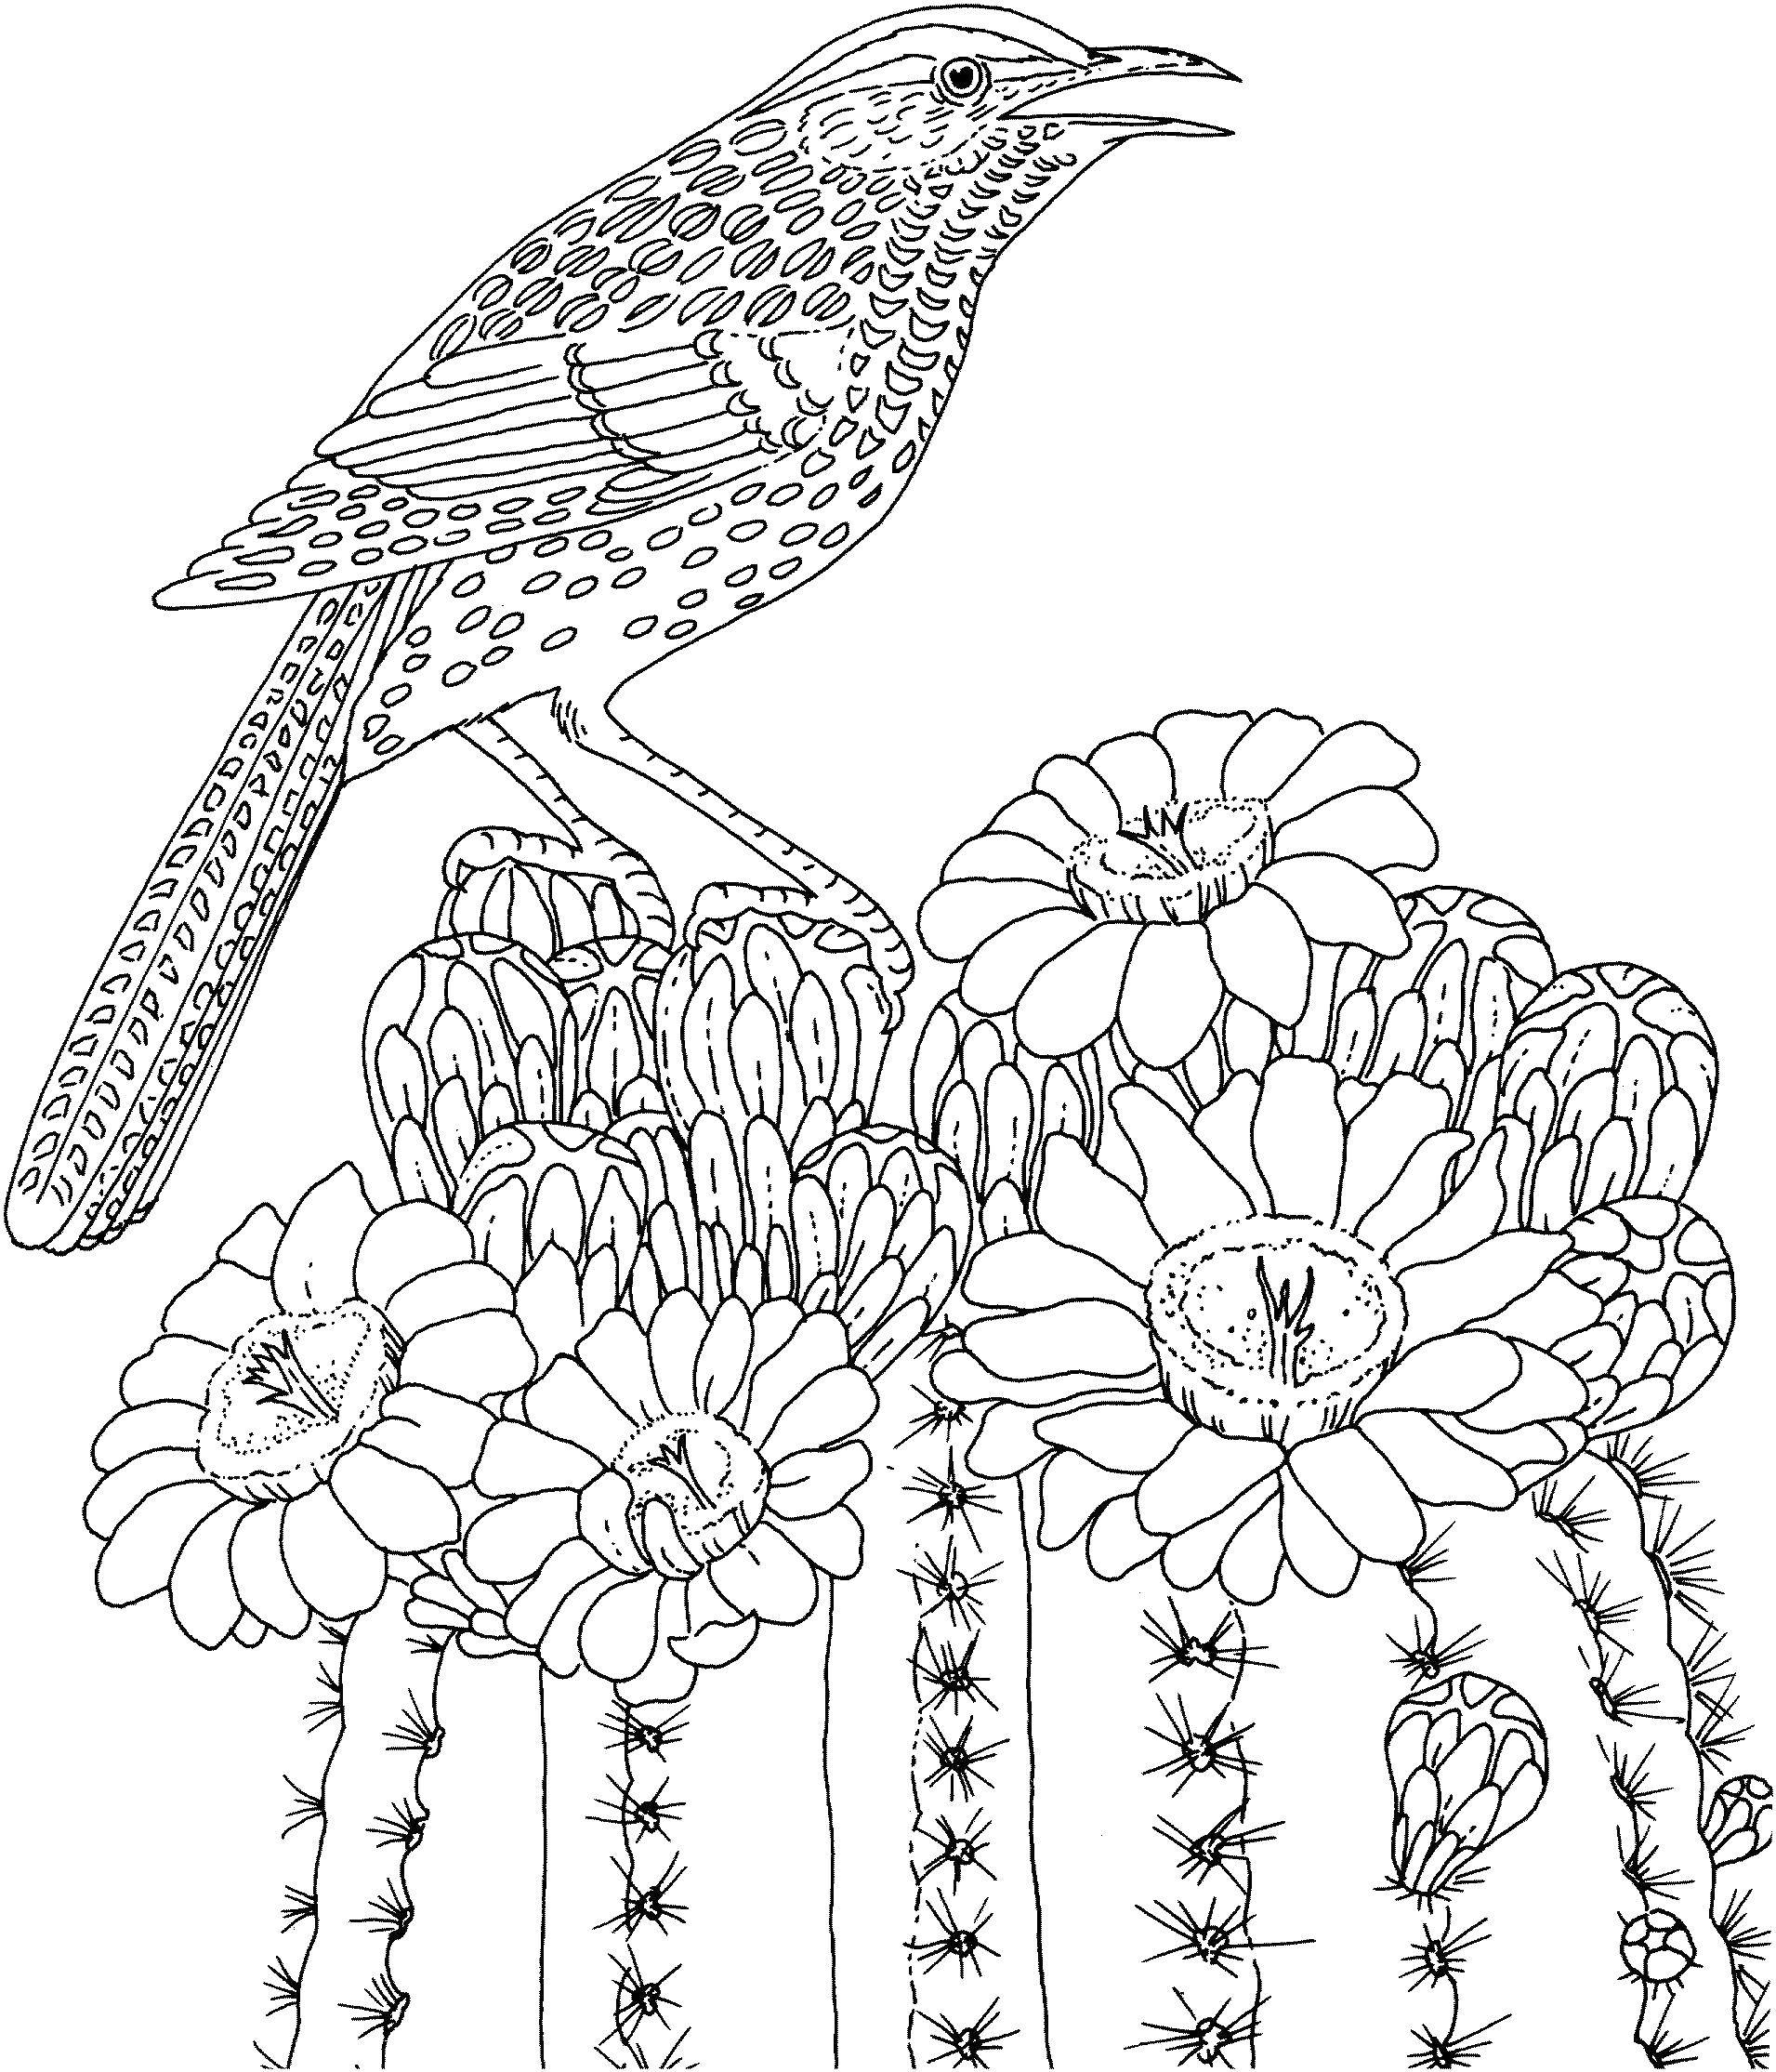 Coloring Bird on a cactus. Category birds. Tags:  birds, flowers, cactus.